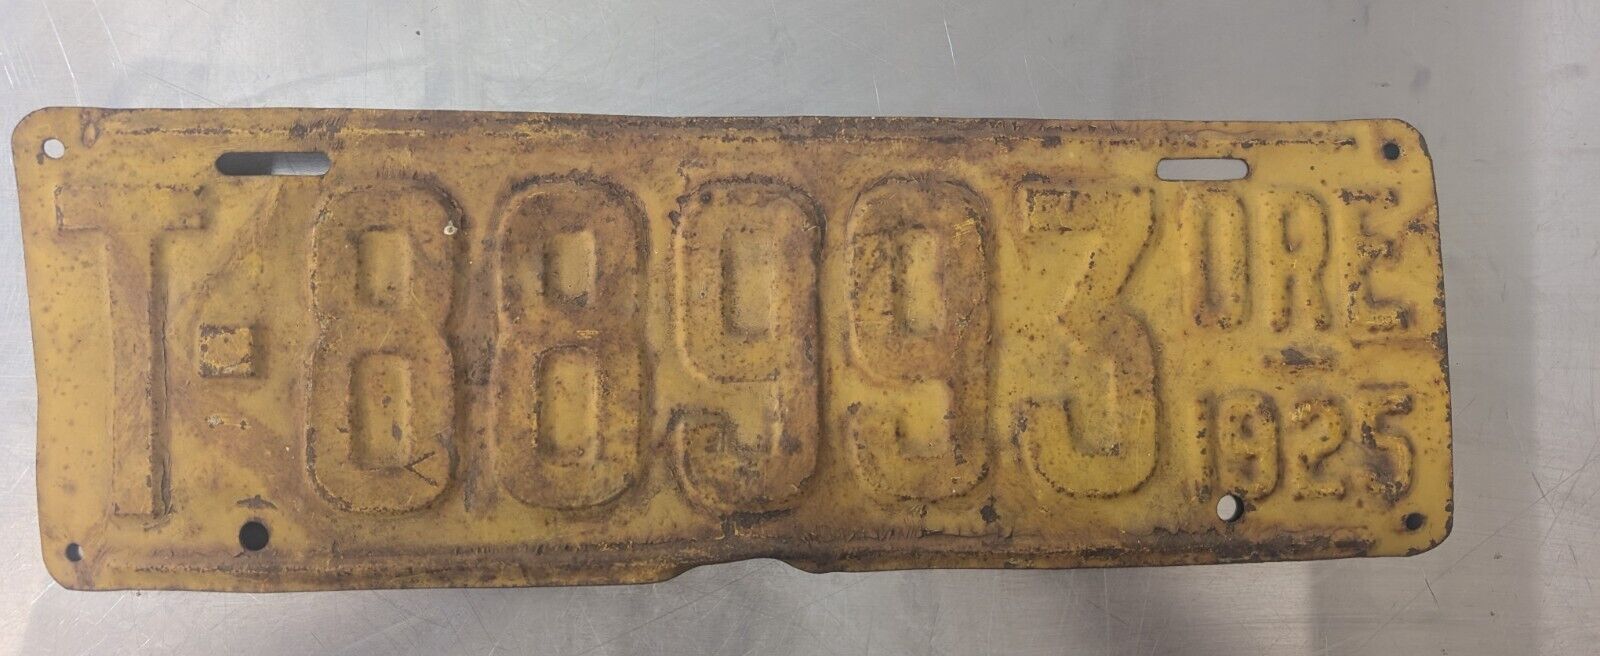 1925 Vintage Oregon License Plate,  Ruff  Condition. T-88993